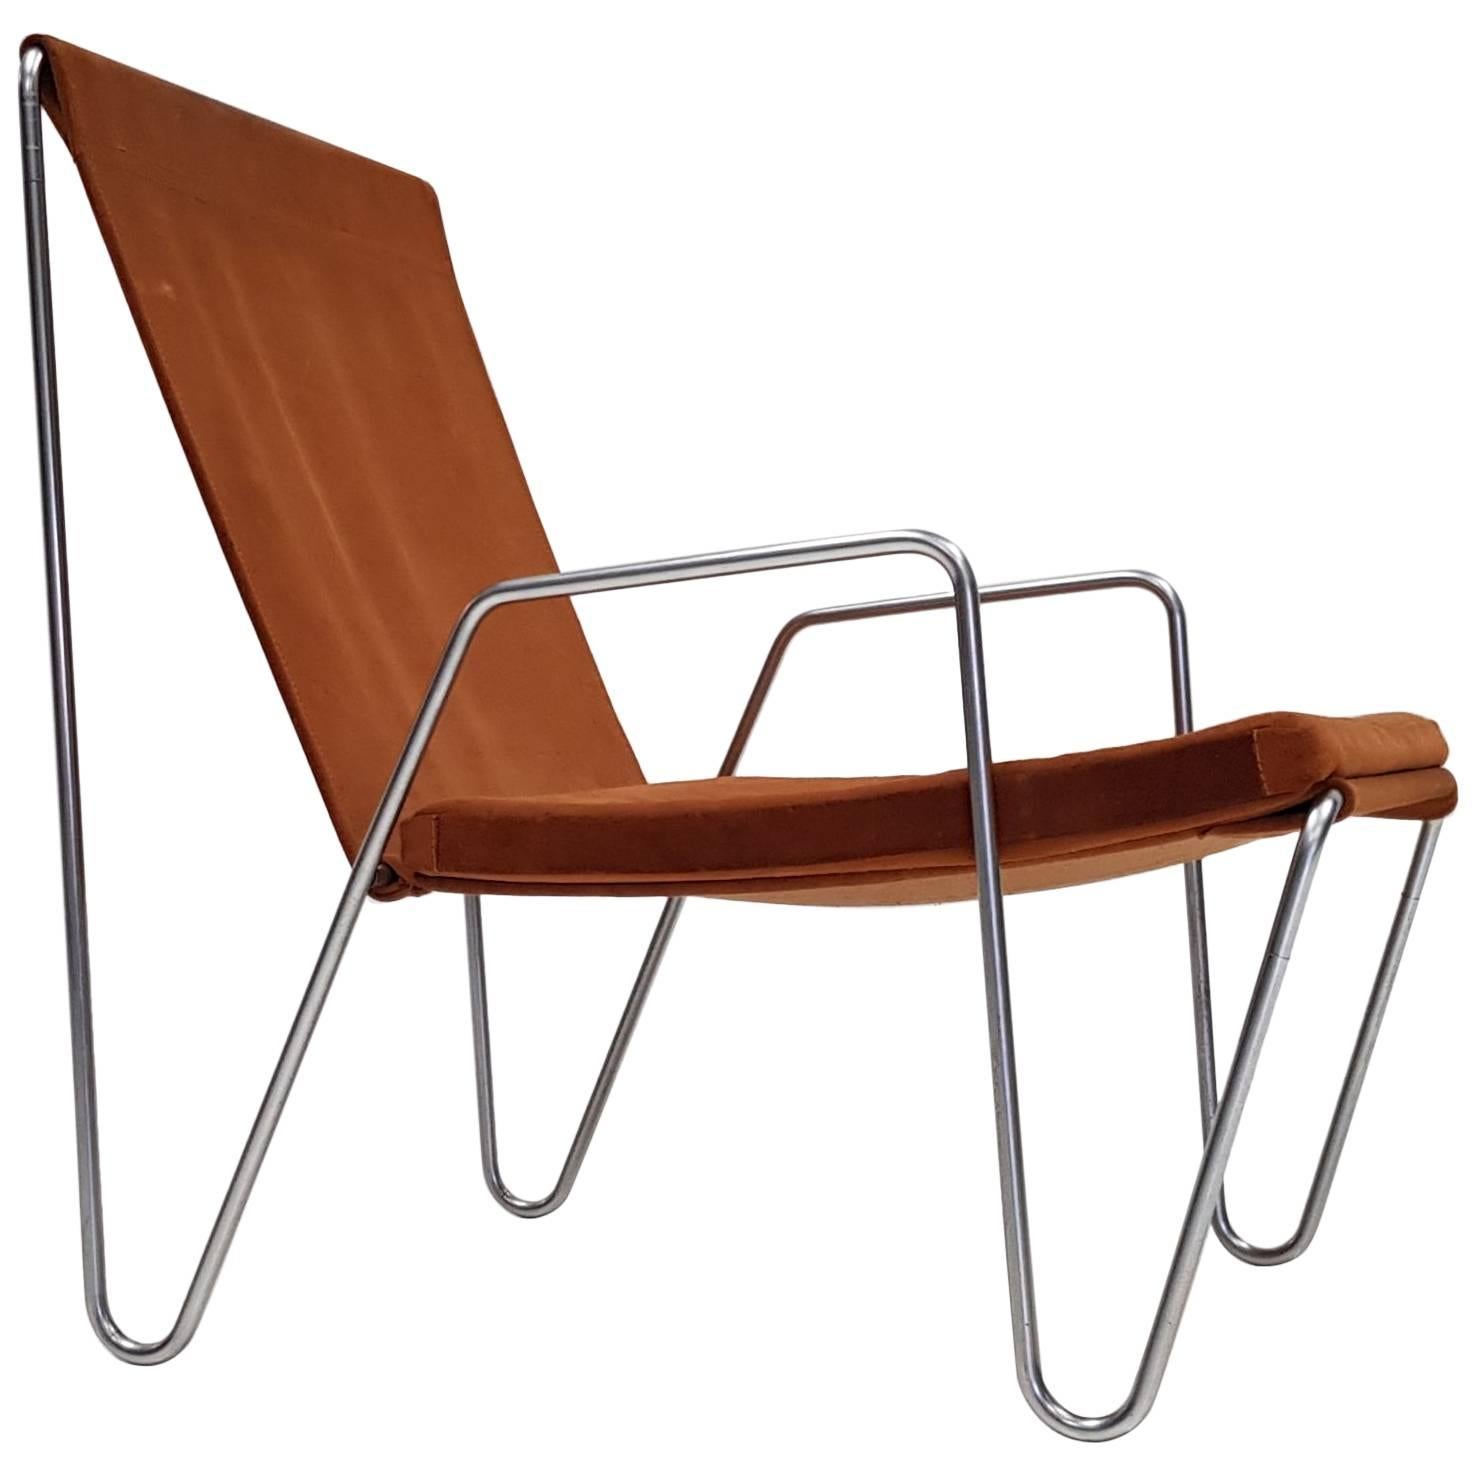 Verner Panton 'Bachelor' Easy Chair, Manufactured by Fritz Hansen, Denmark, 1955